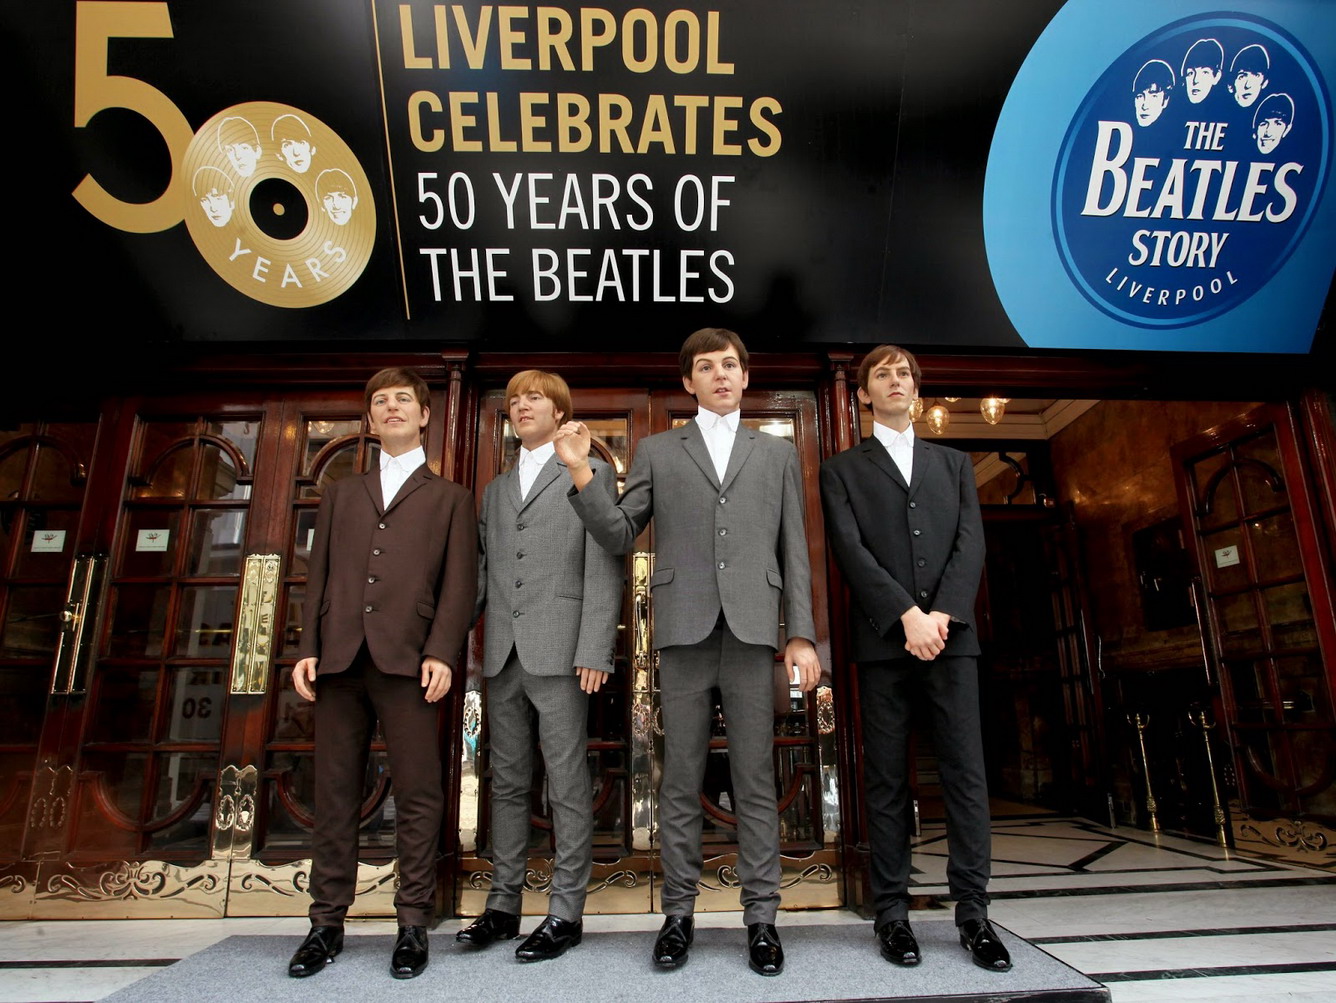 Liverpool - nơi khai sinh huyền thoại The Beatles